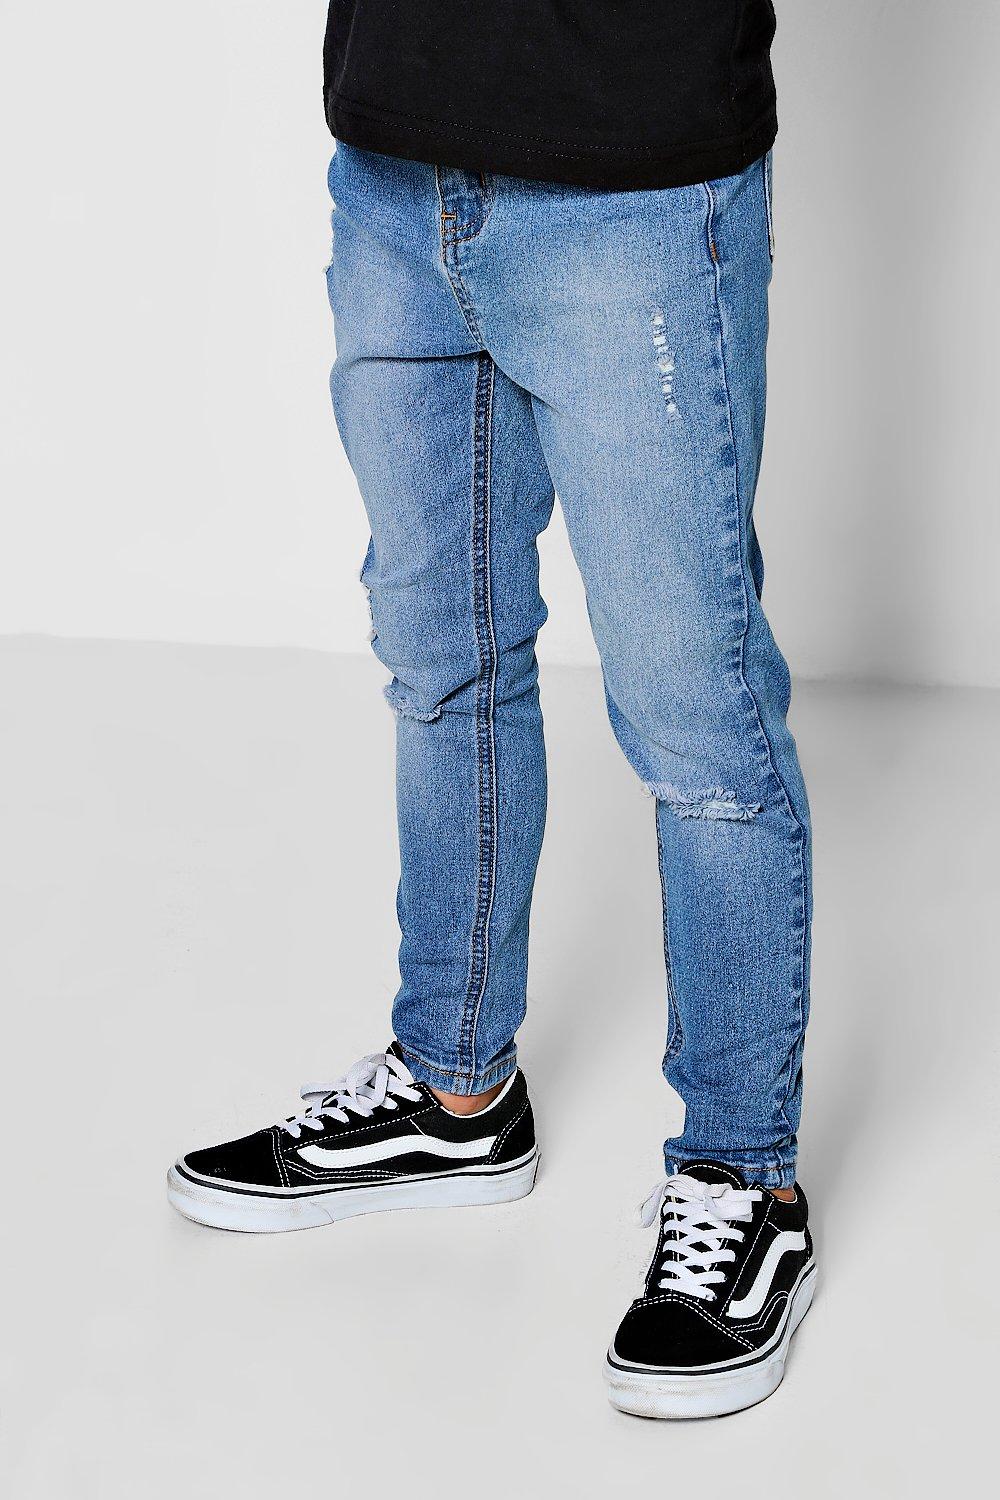 boy jeans style